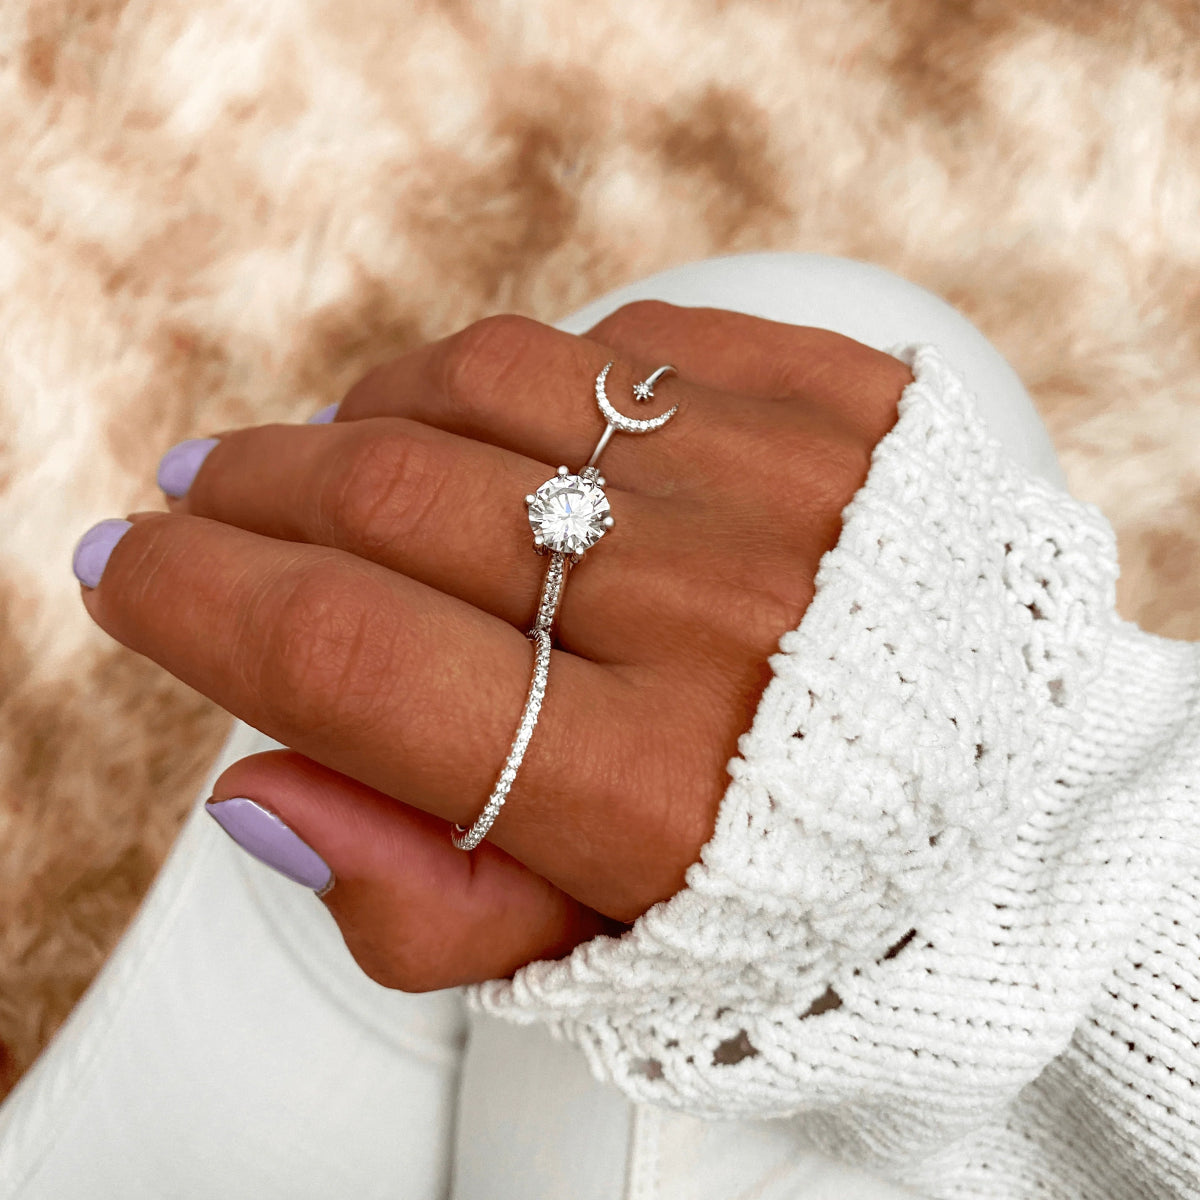 "Proposal" Ring - Milas Jewels Shop